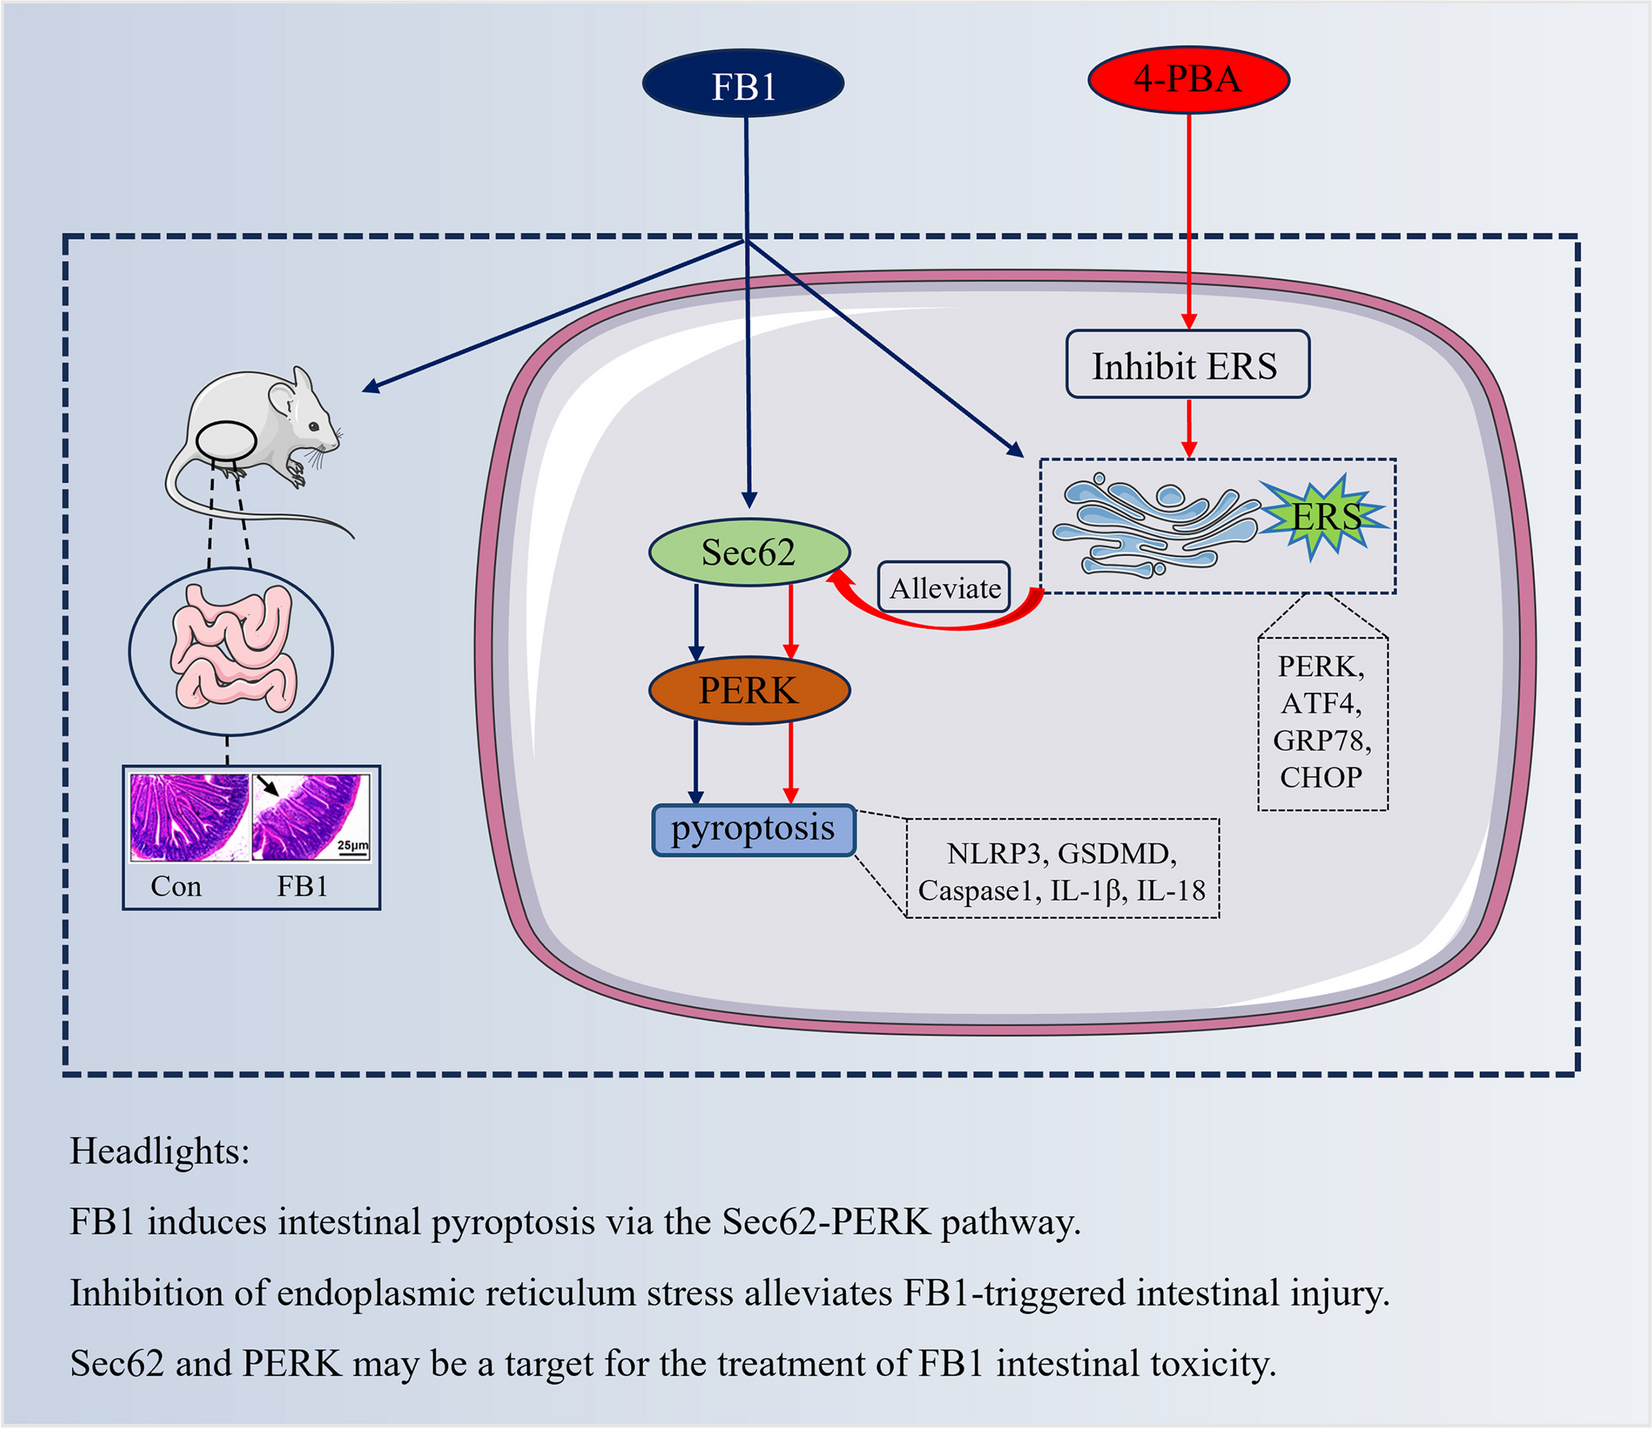 Mild endoplasmic reticulum stress alleviates FB1-triggered intestinal pyroptosis via the Sec62-PERK pathway